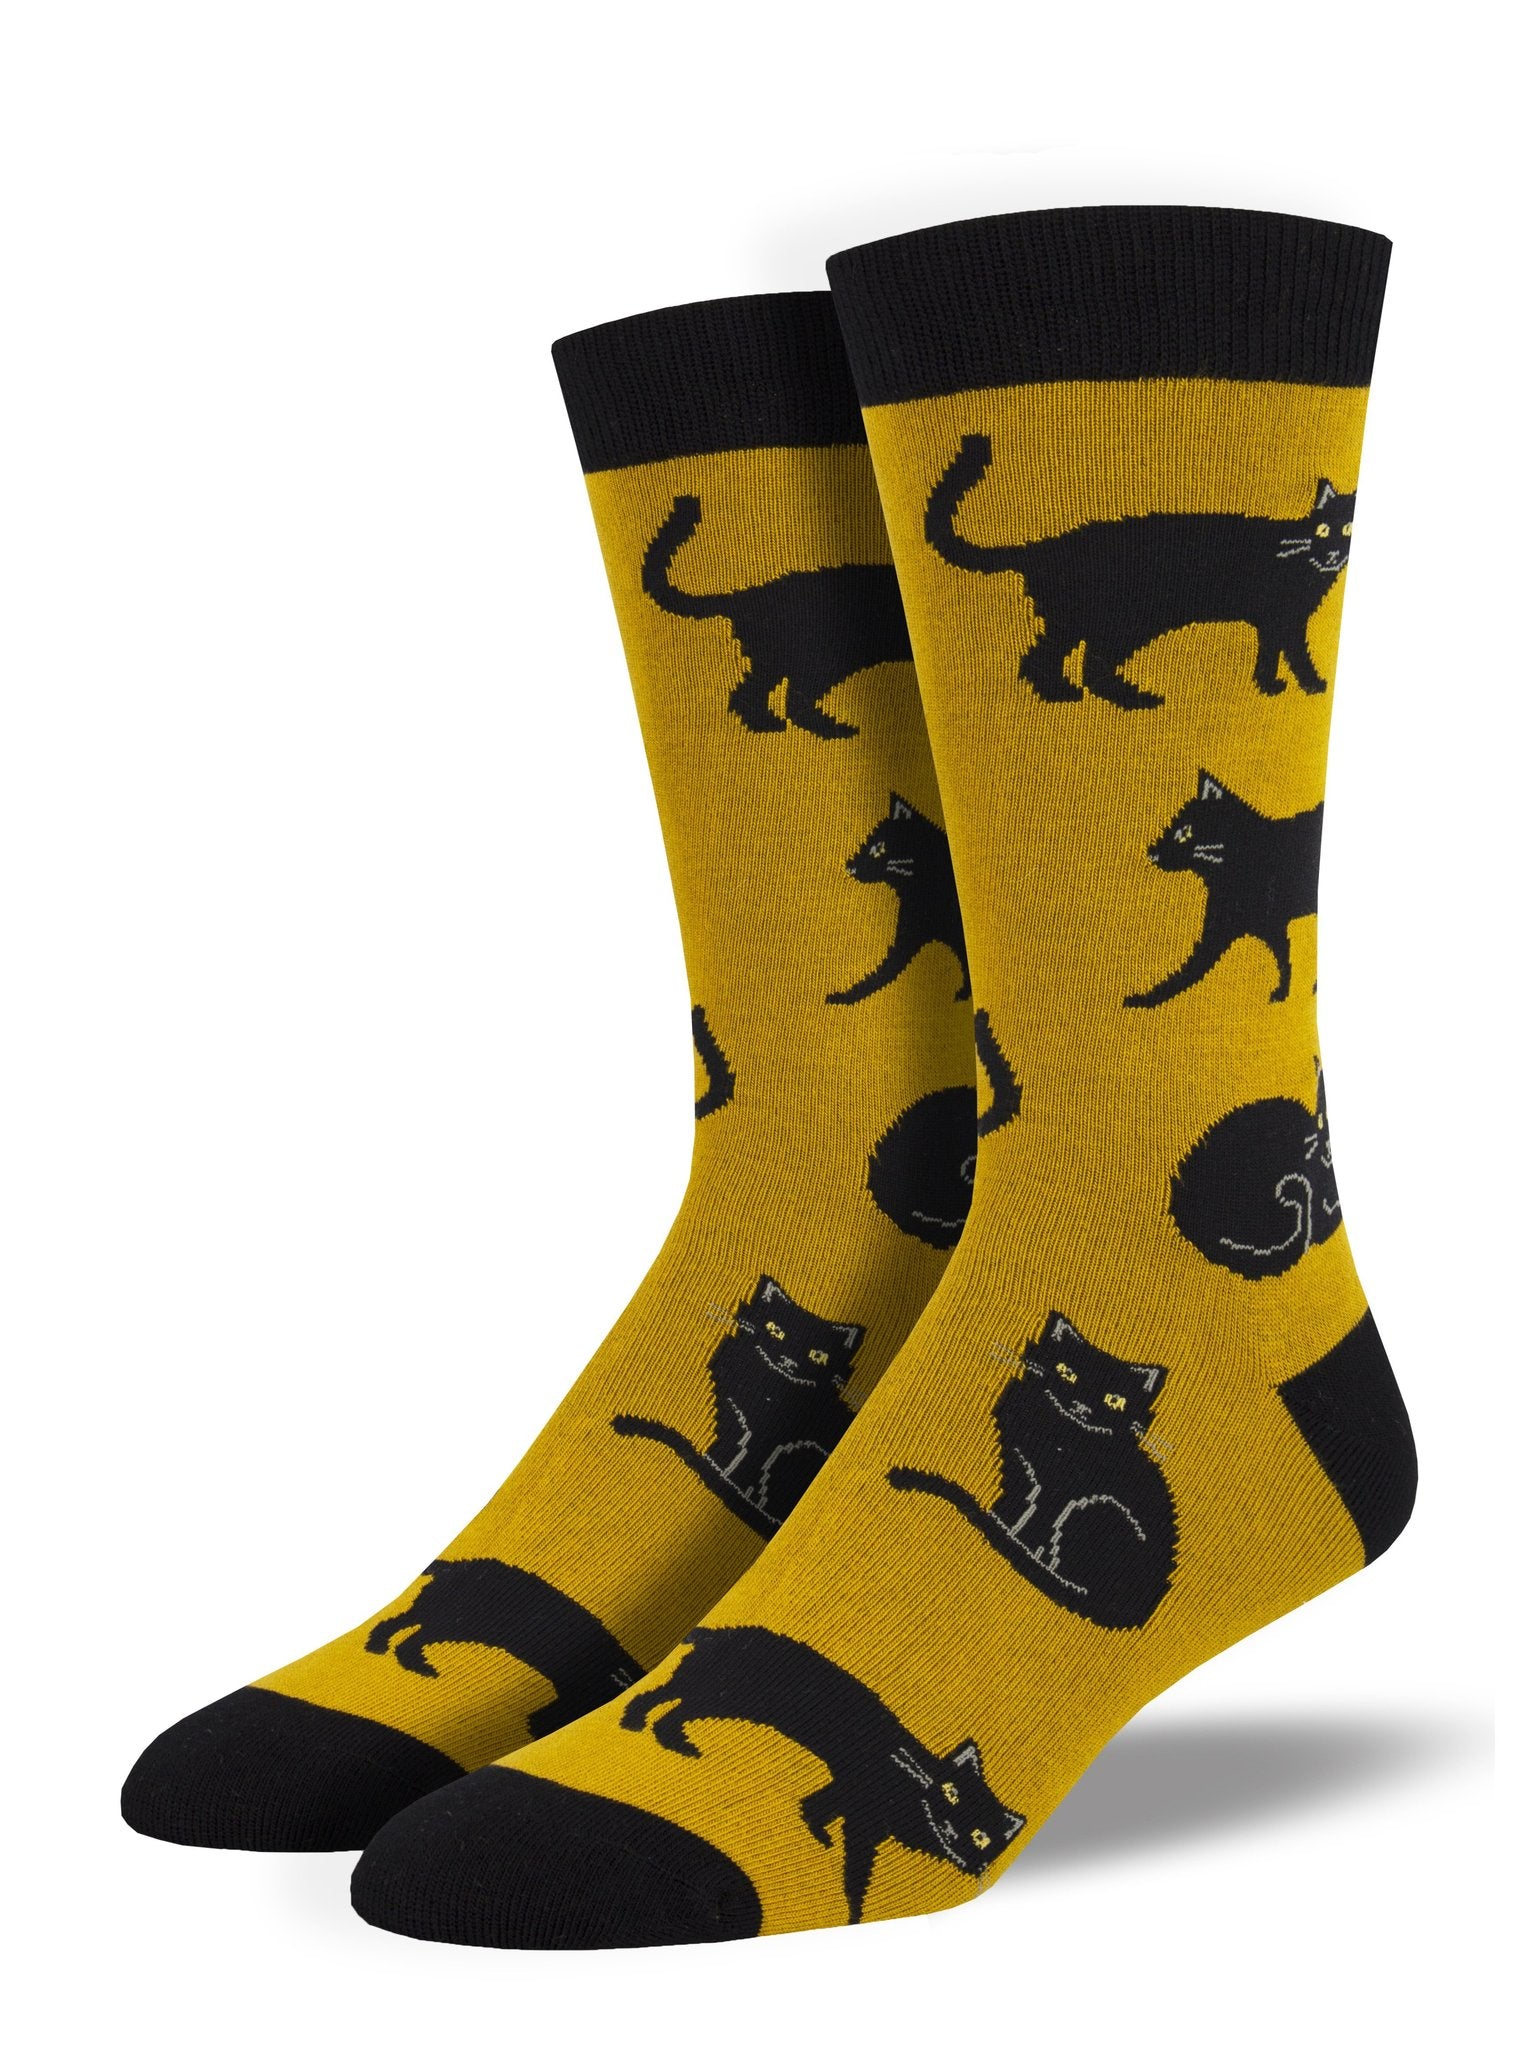 Black Cat Men's Socks